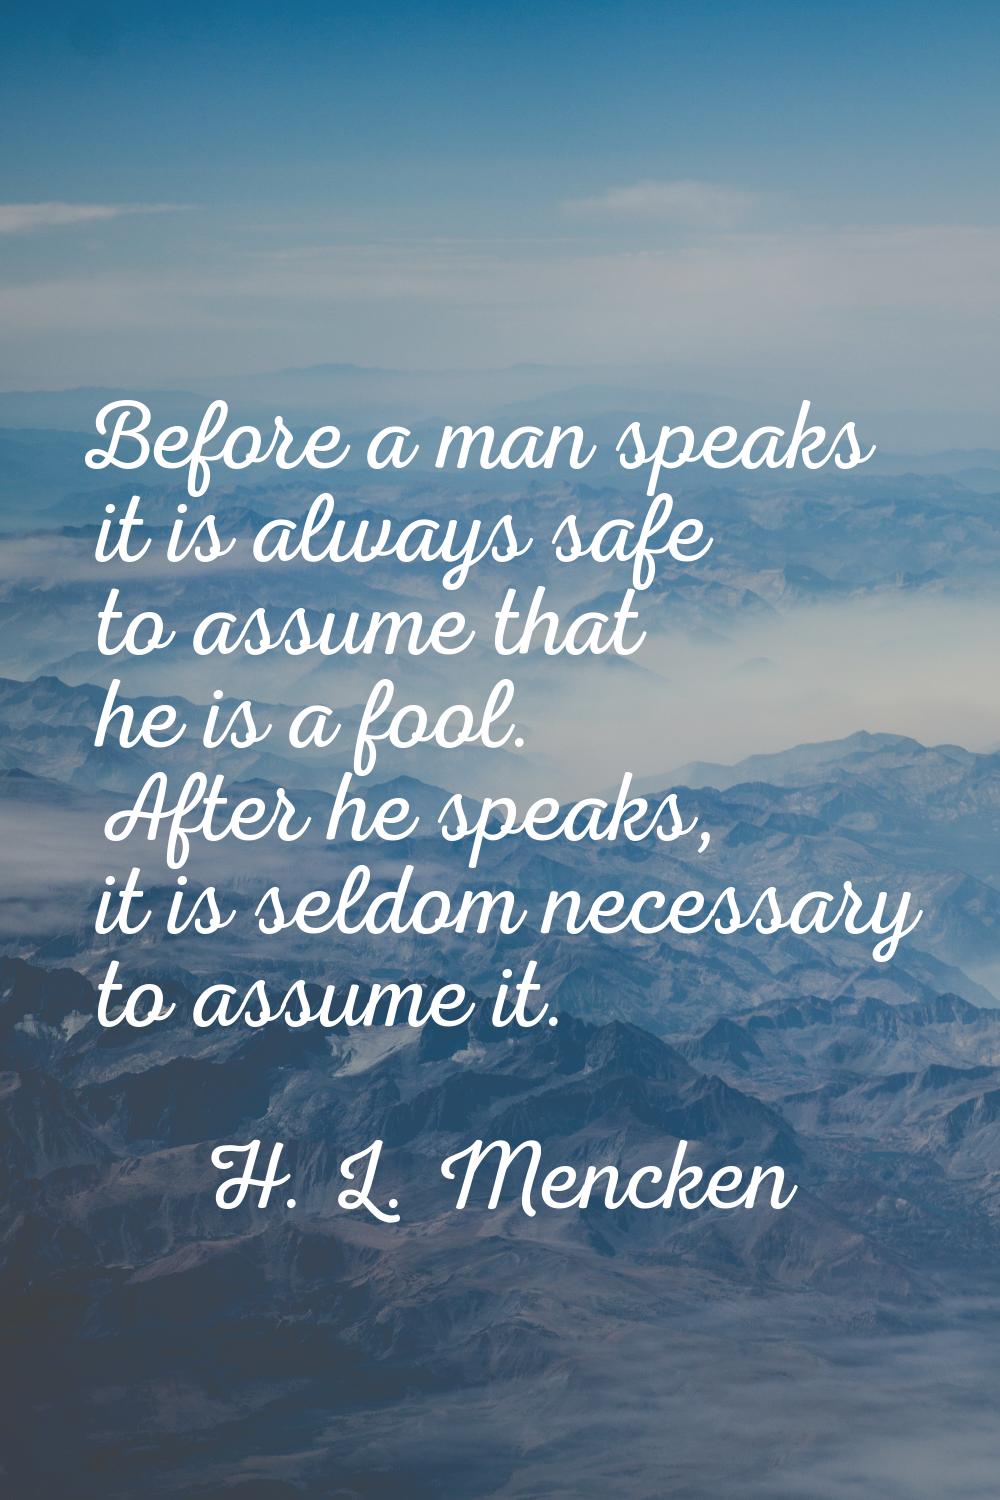 Before a man speaks it is always safe to assume that he is a fool. After he speaks, it is seldom ne